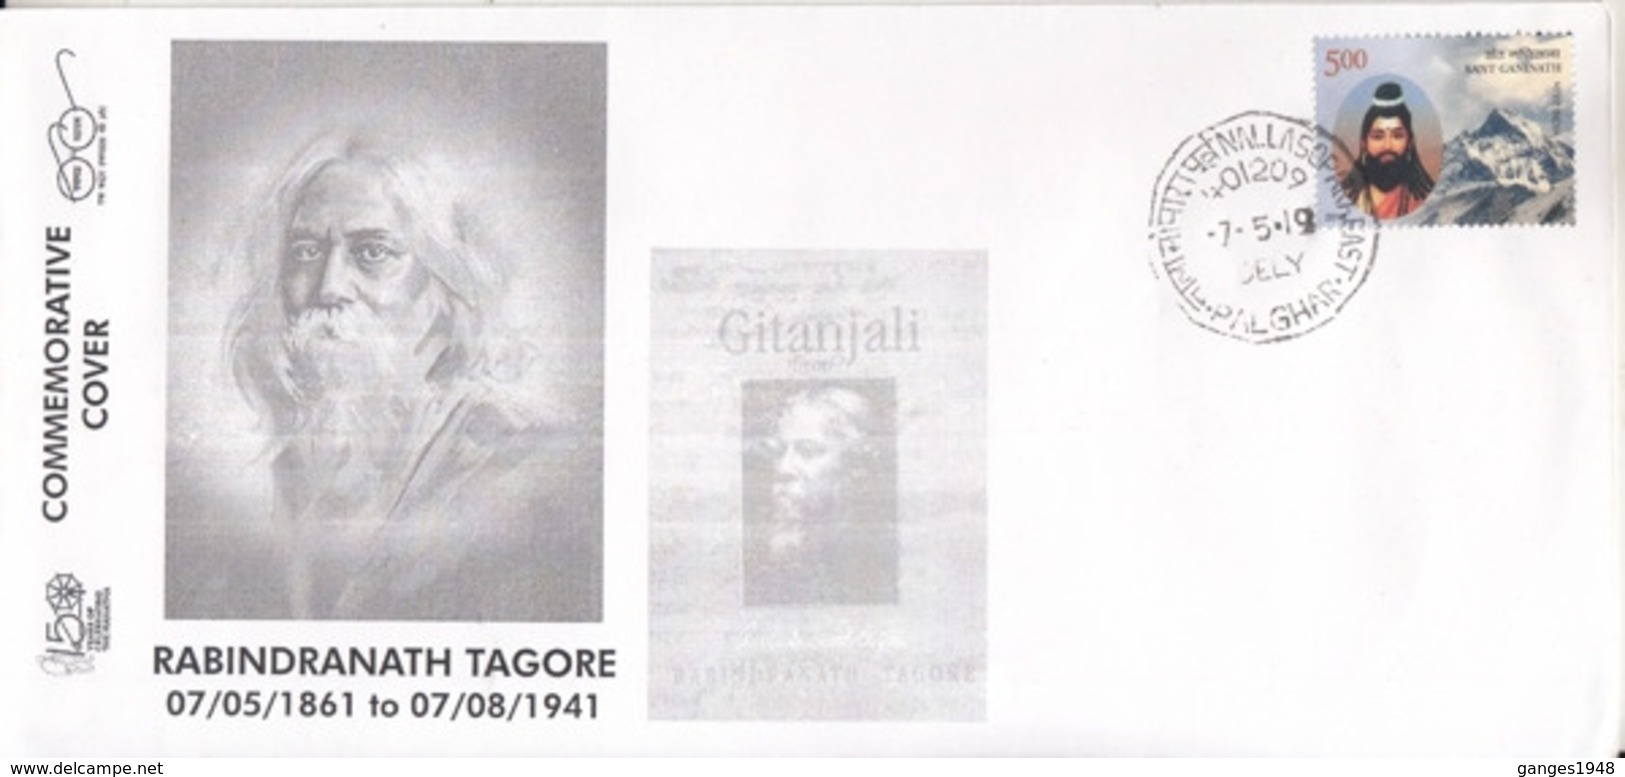 India 2019  Nebel Laureate  Rabindranath Tagore  1931 Litereature Nobel Awardee  Special Cover # 19518  D  Indien Inde - Nobel Prize Laureates